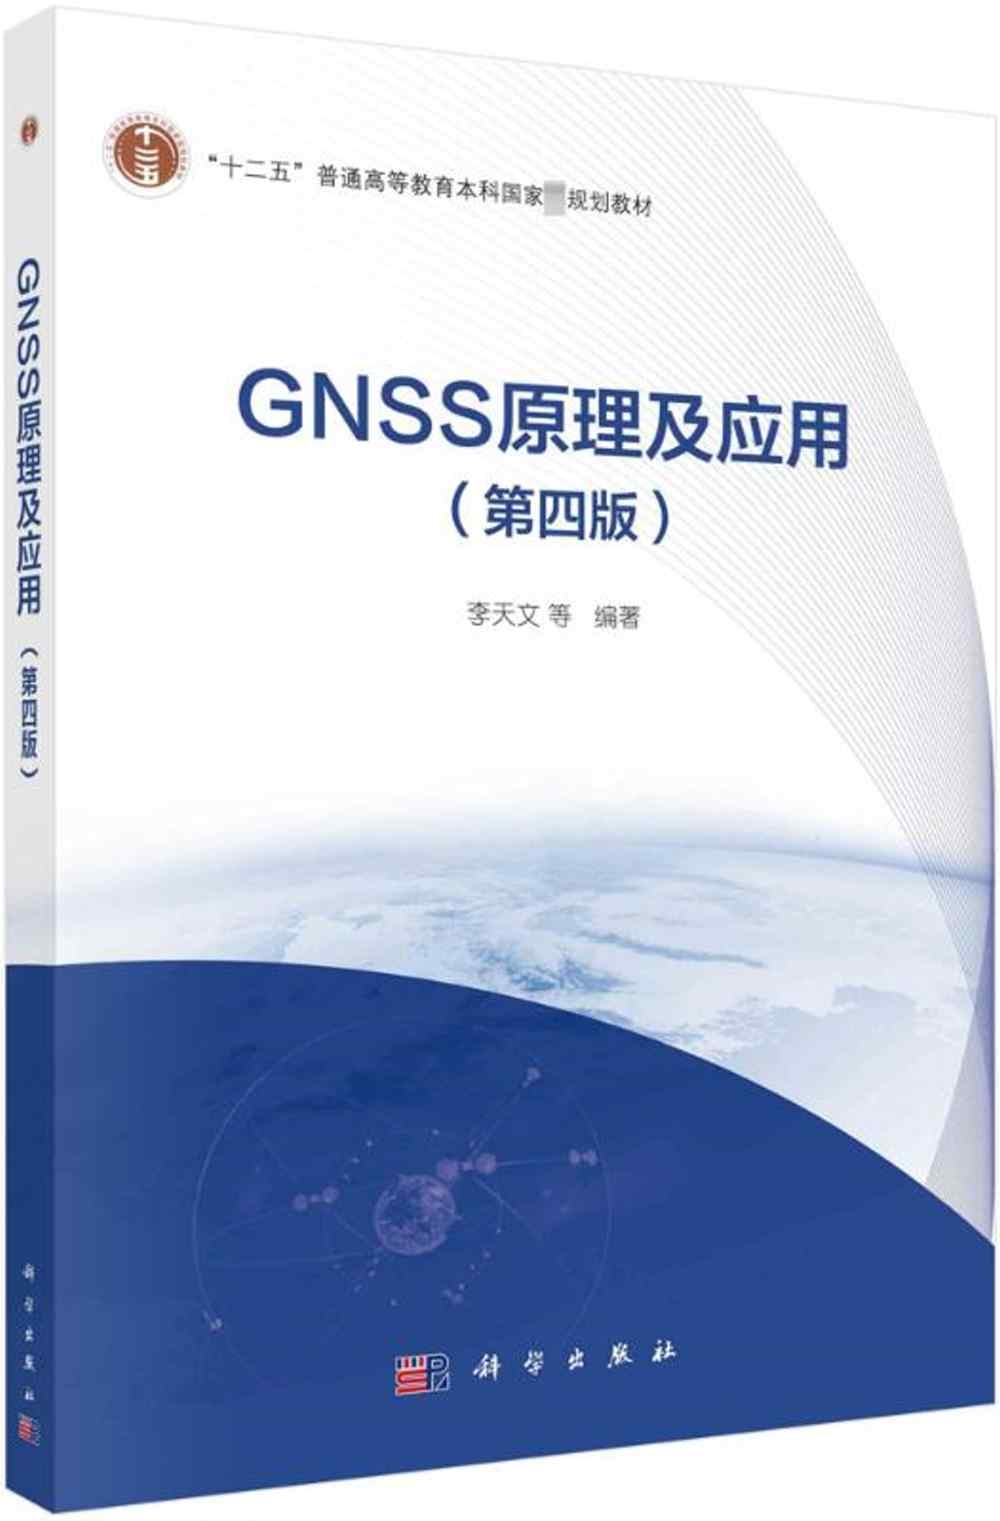 GNSS原理及應用（第四版）